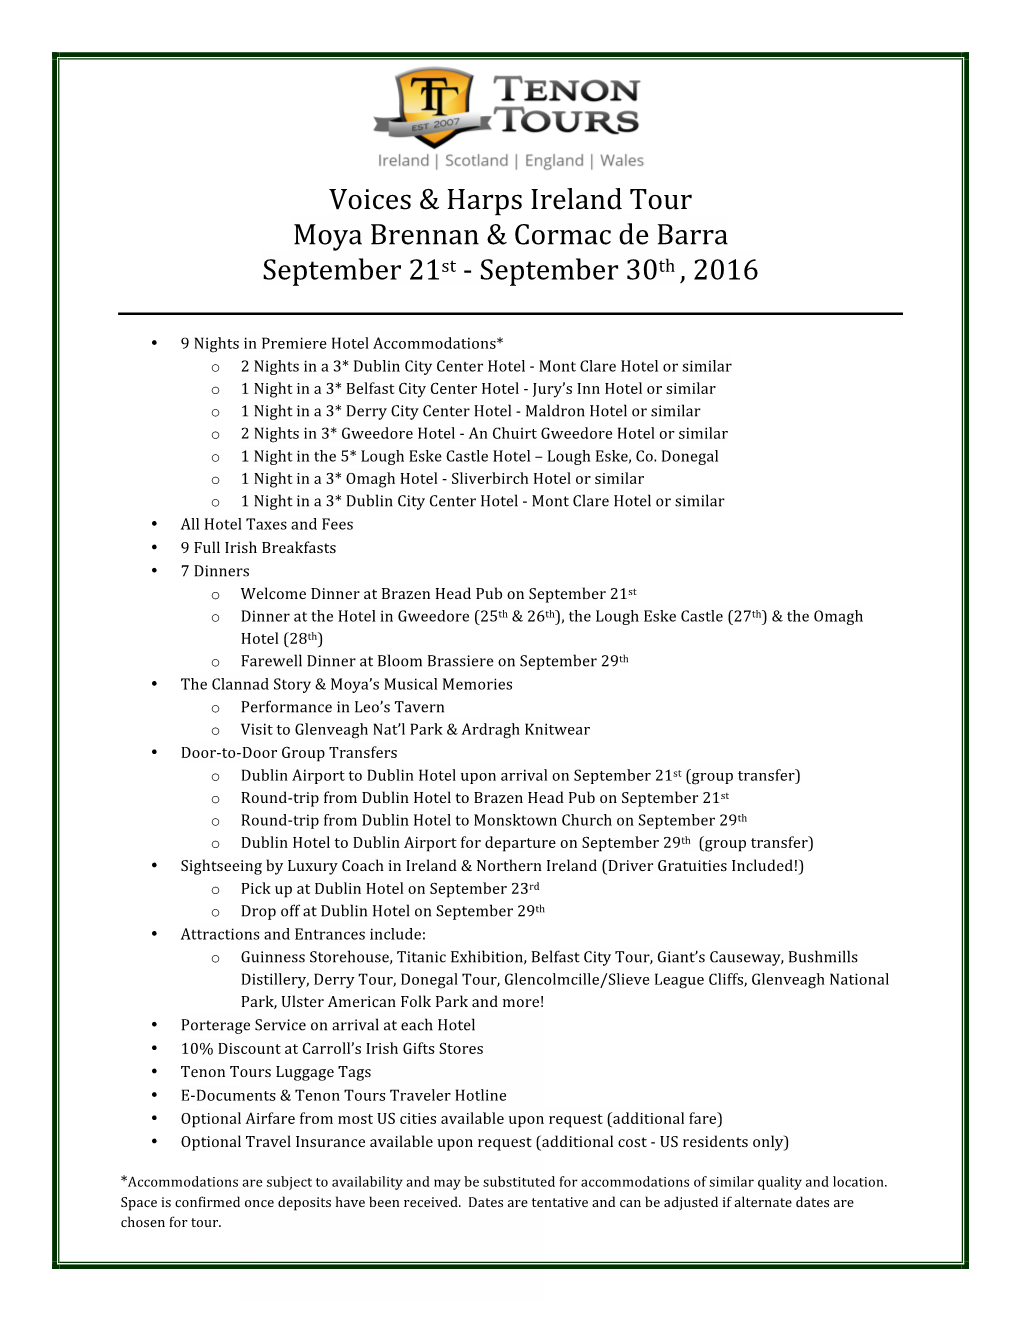 Voices & Harps Ireland Tour Moya Brennan & Cormac